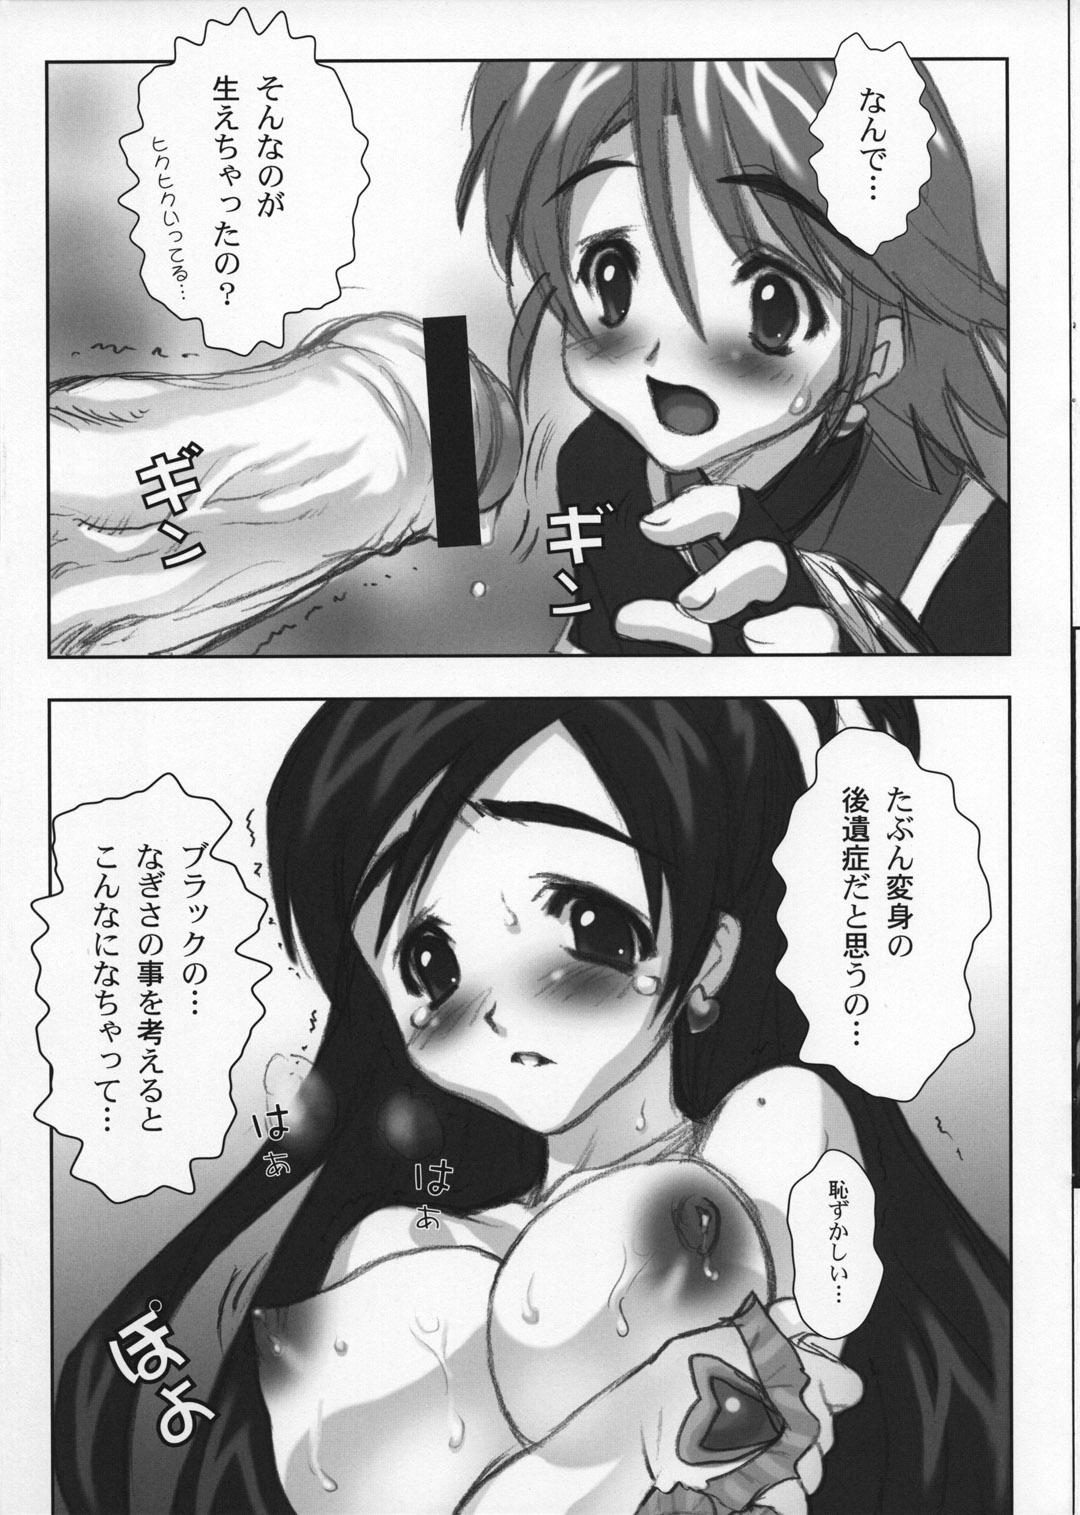 First Yorokobi no Kuni vol.02 - Pretty cure Black - Page 10